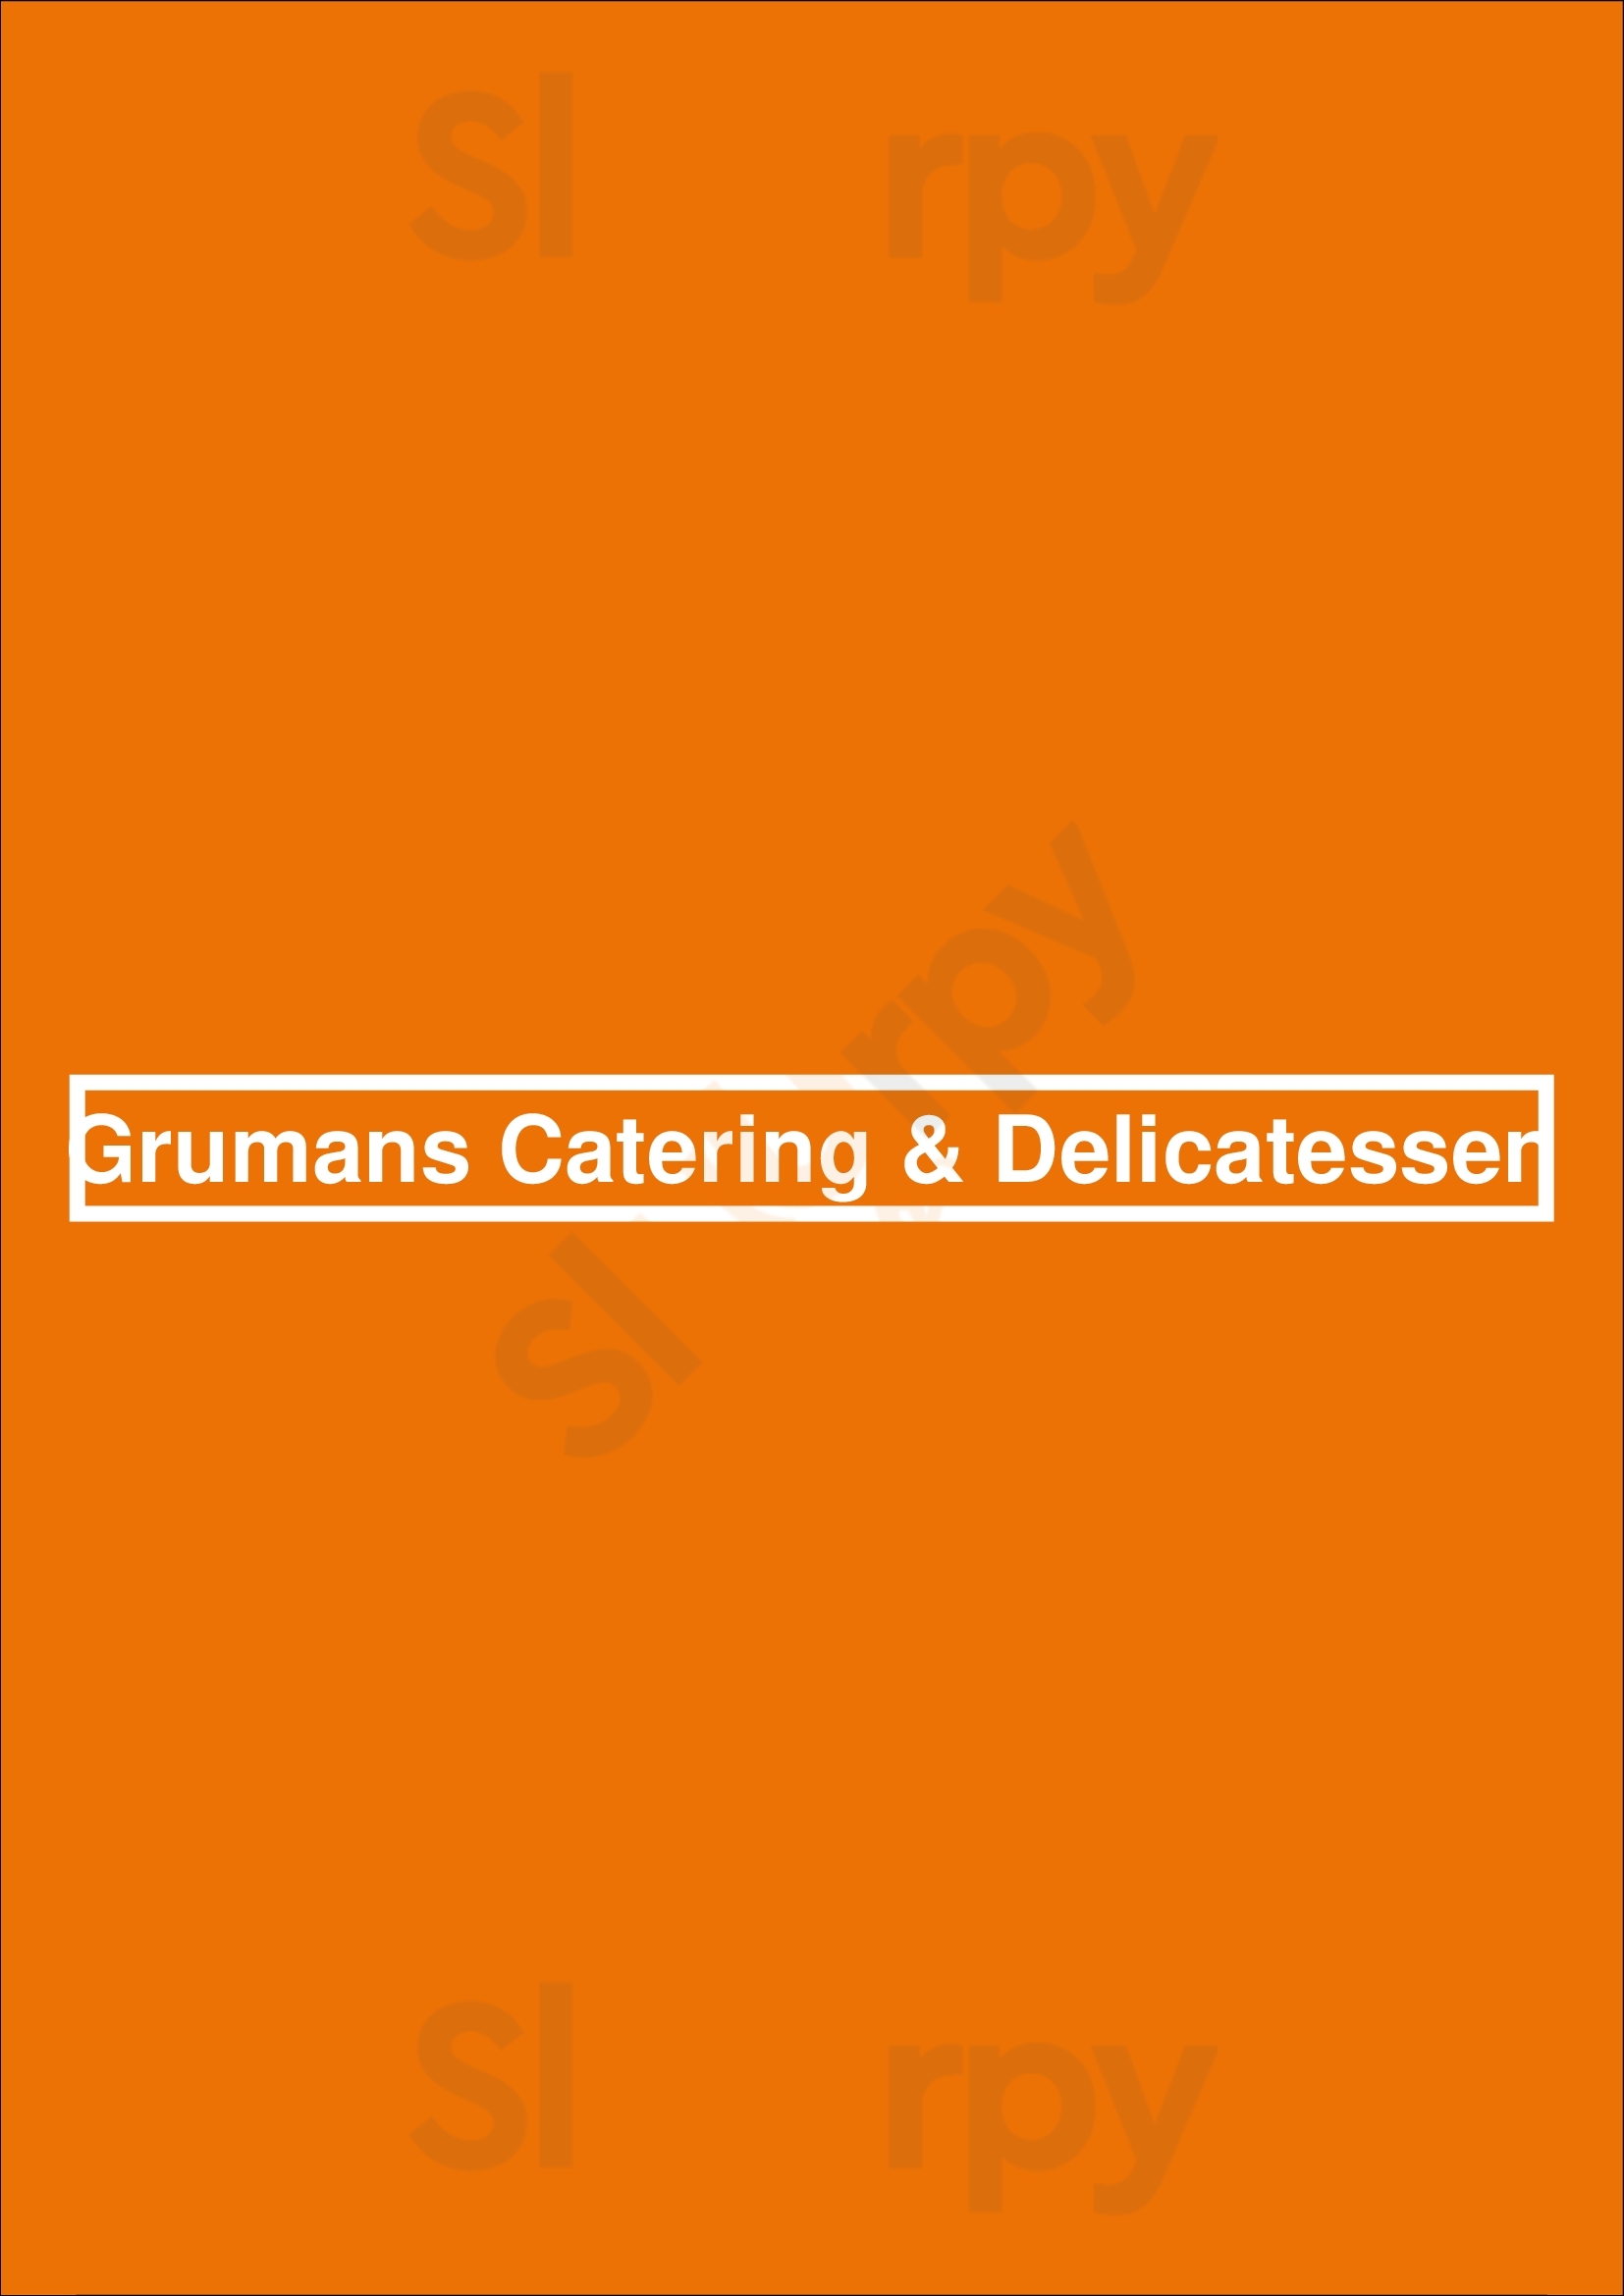 Grumans Catering & Delicatessen Calgary Menu - 1